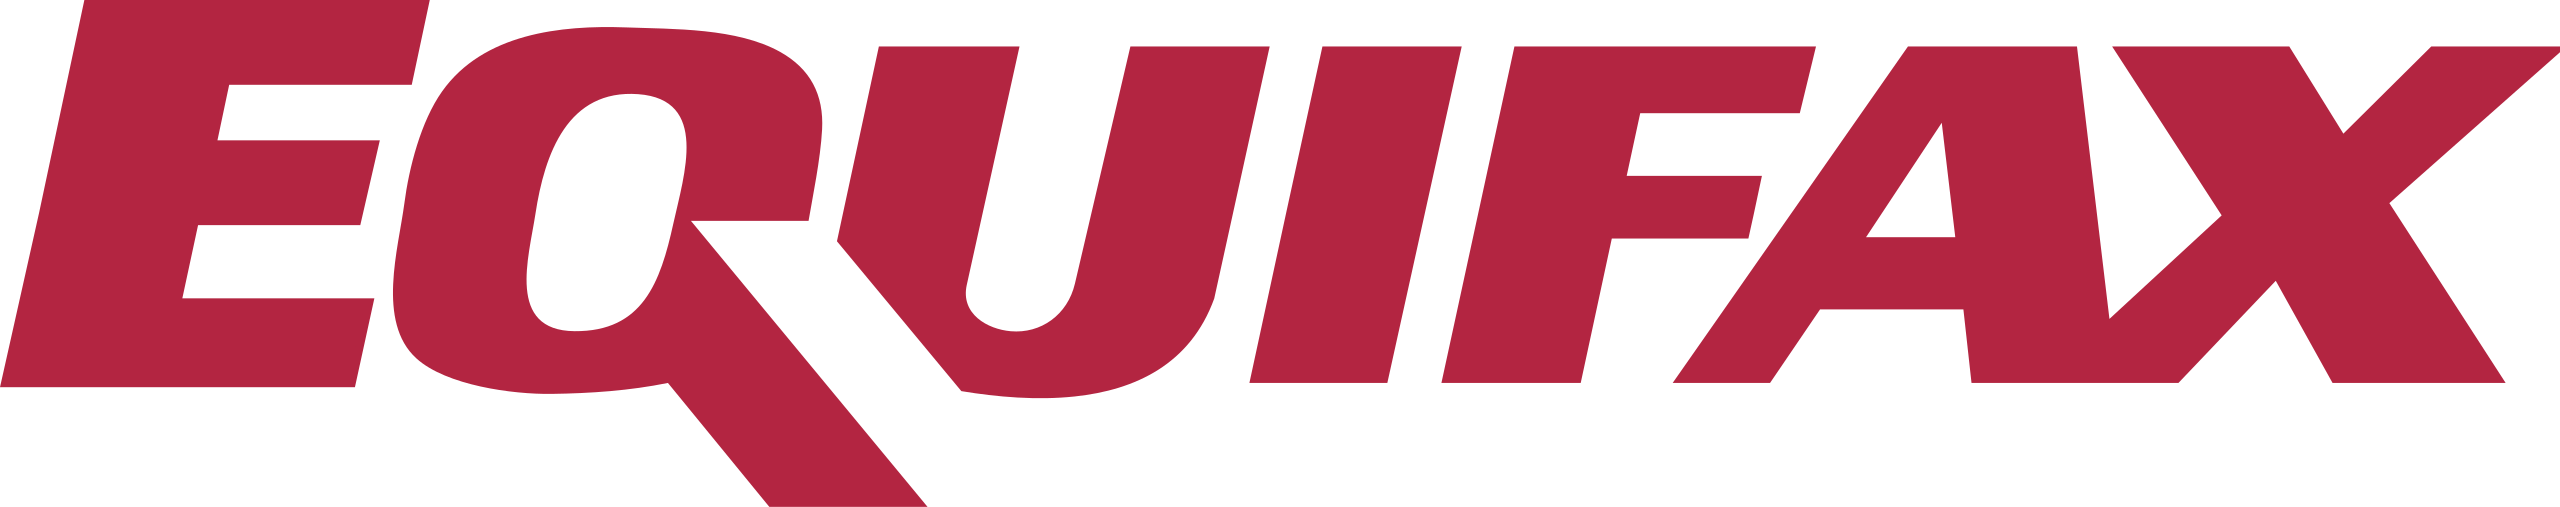 Equifax_Logo.svg